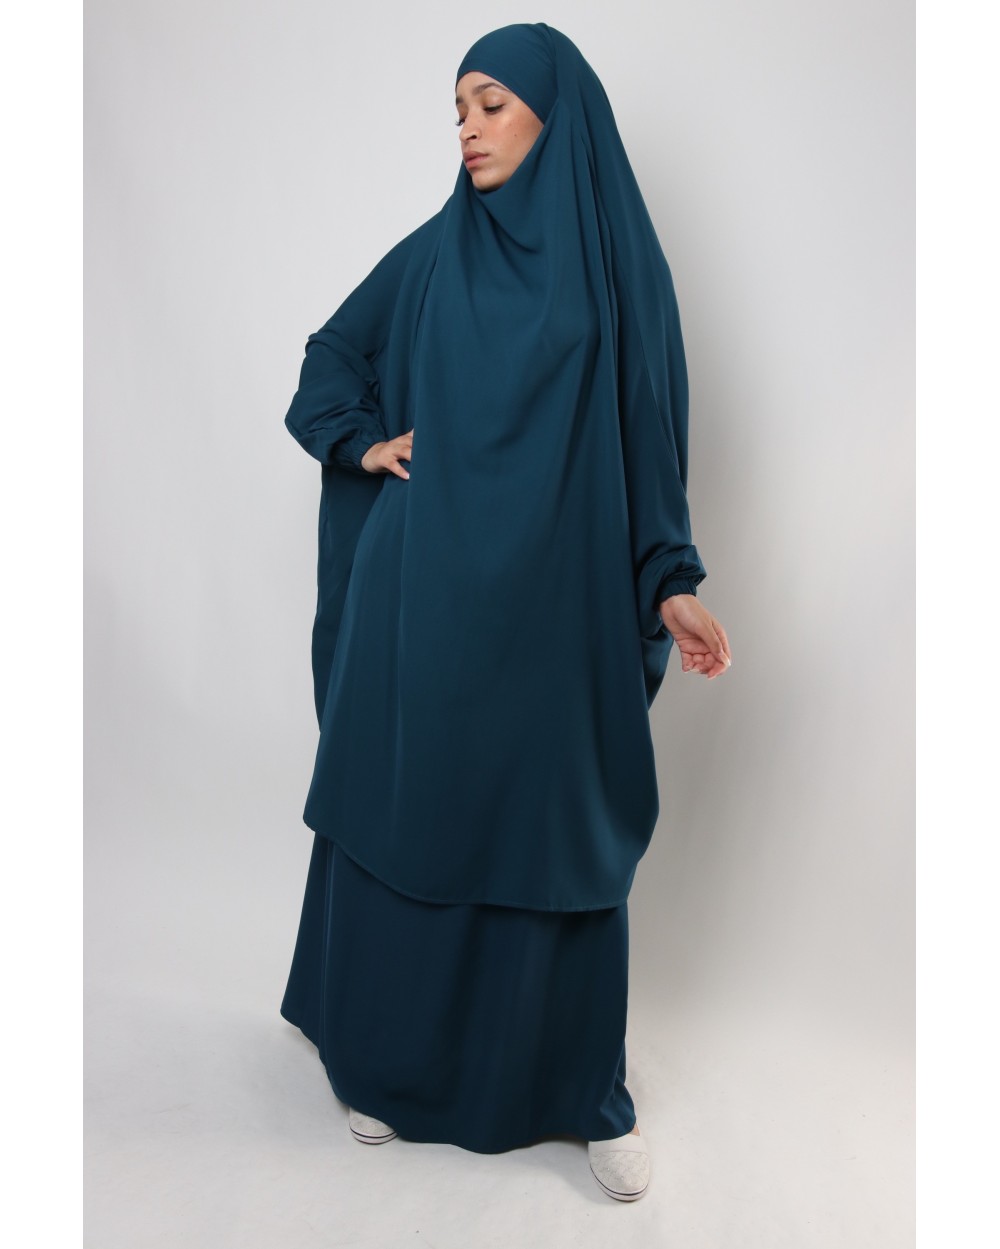 Jilbab JAMILA light microfiber skirt